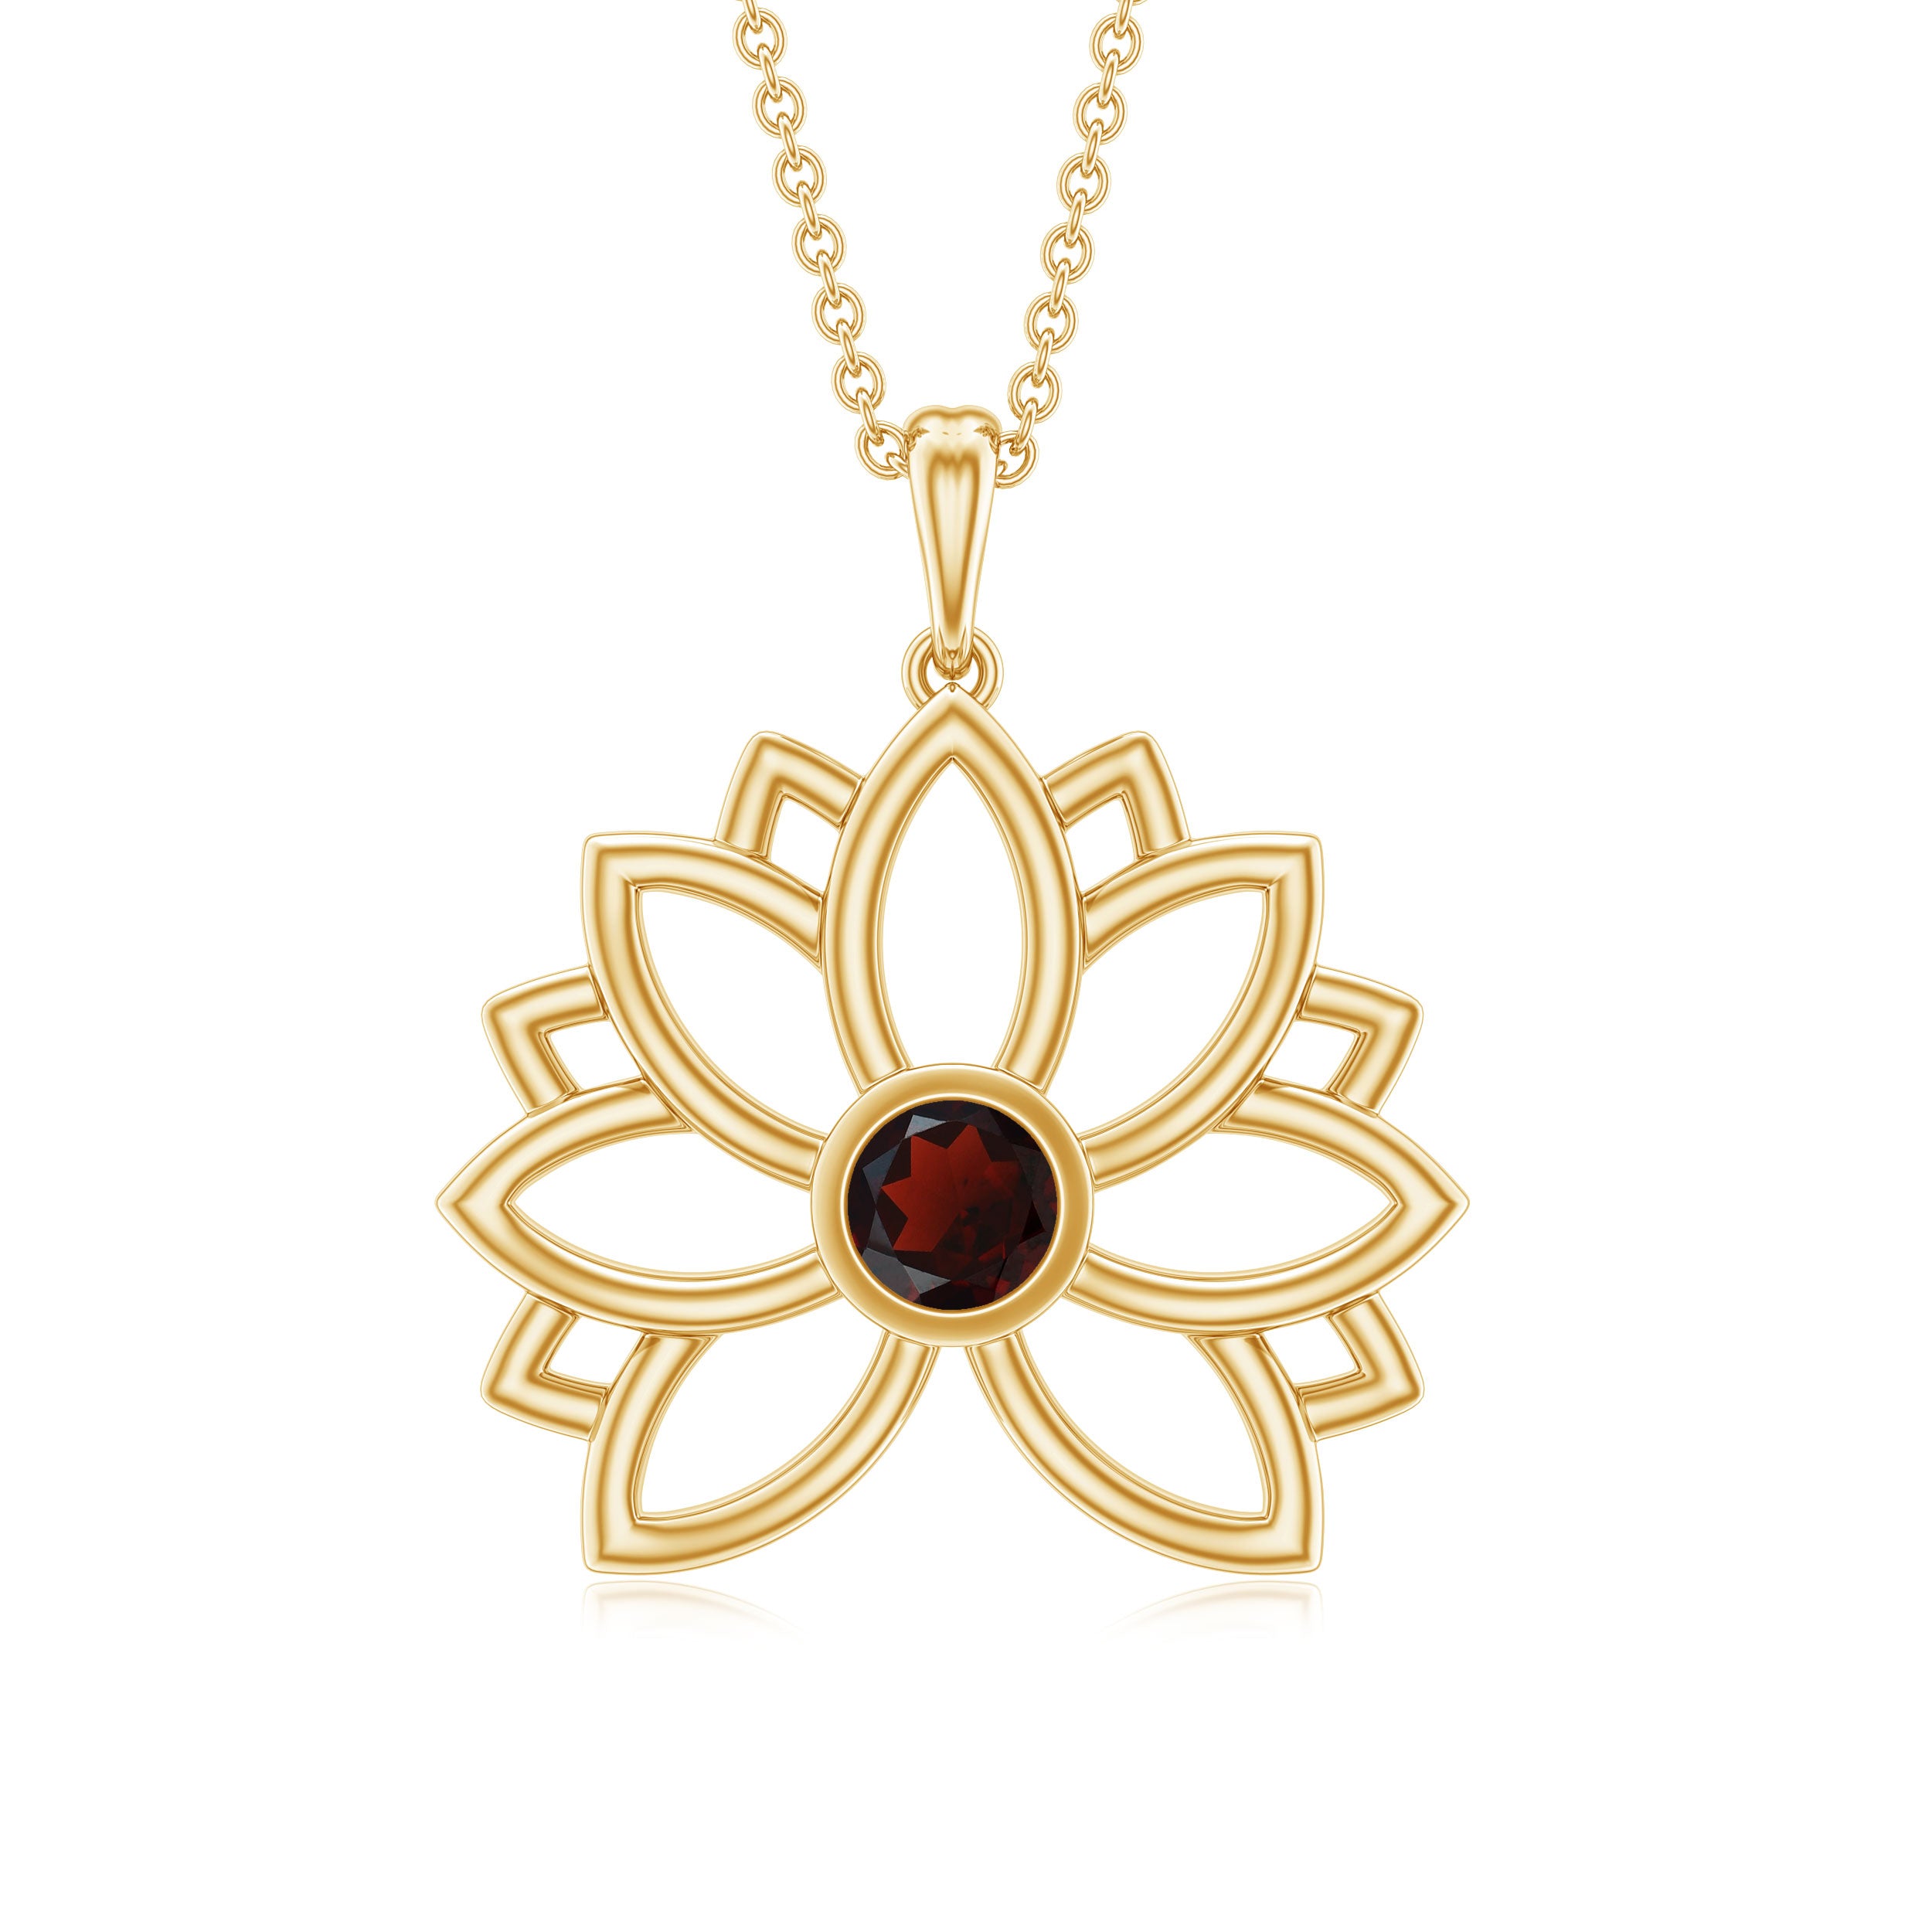 Gold Lotus Flower Pendant with 3 MM Round Cut Garnet Garnet - ( AAA ) - Quality - Rosec Jewels